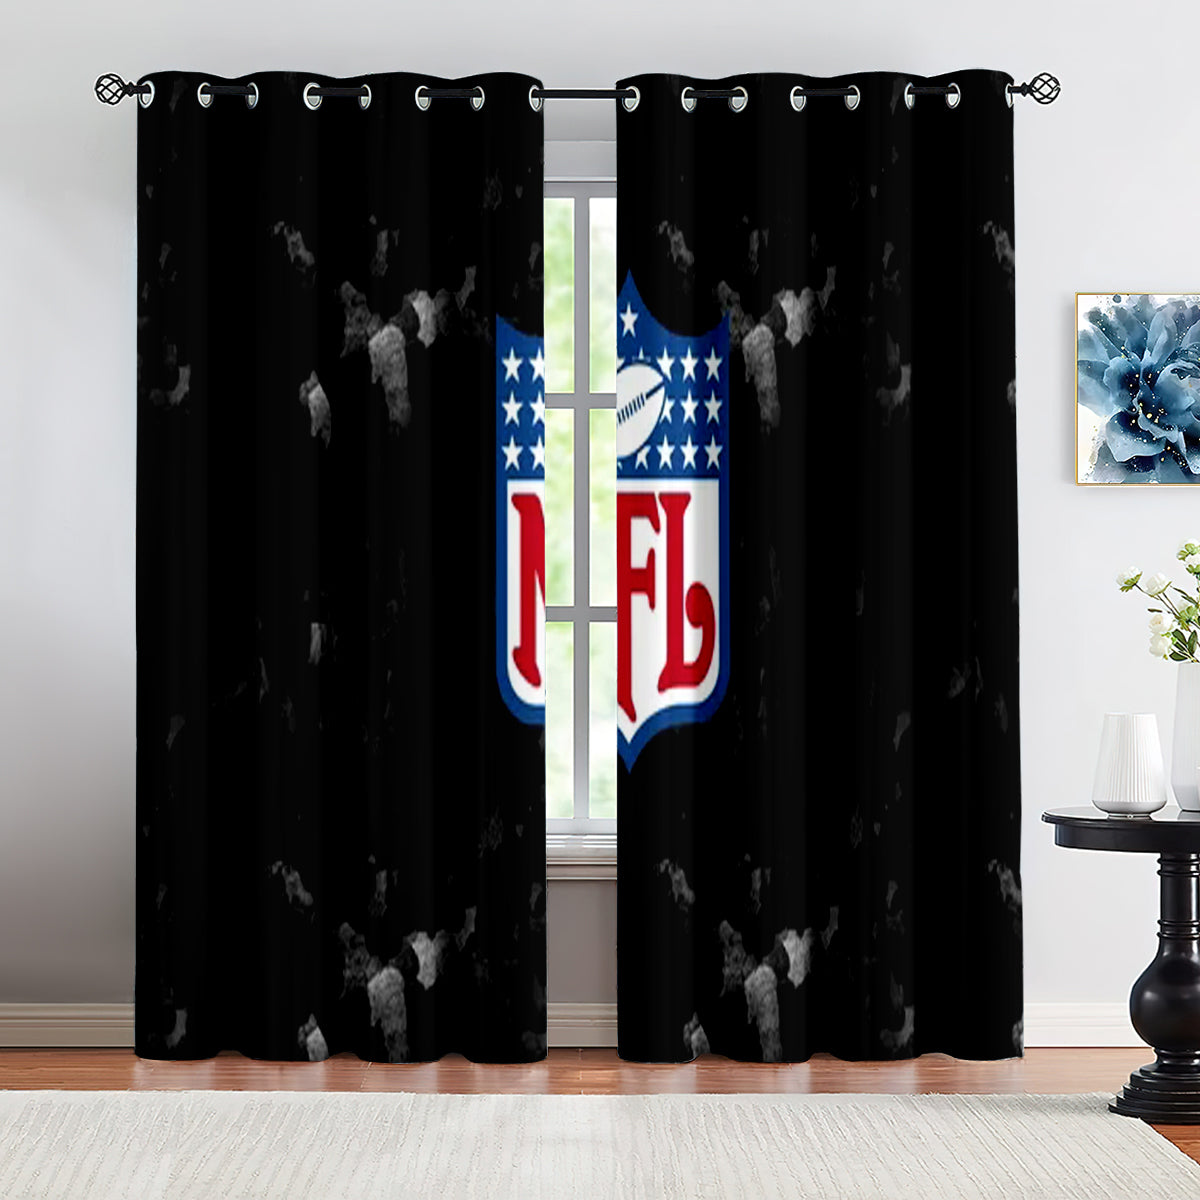 Football League Blackout Curtains Drapes for Window Treatment Set